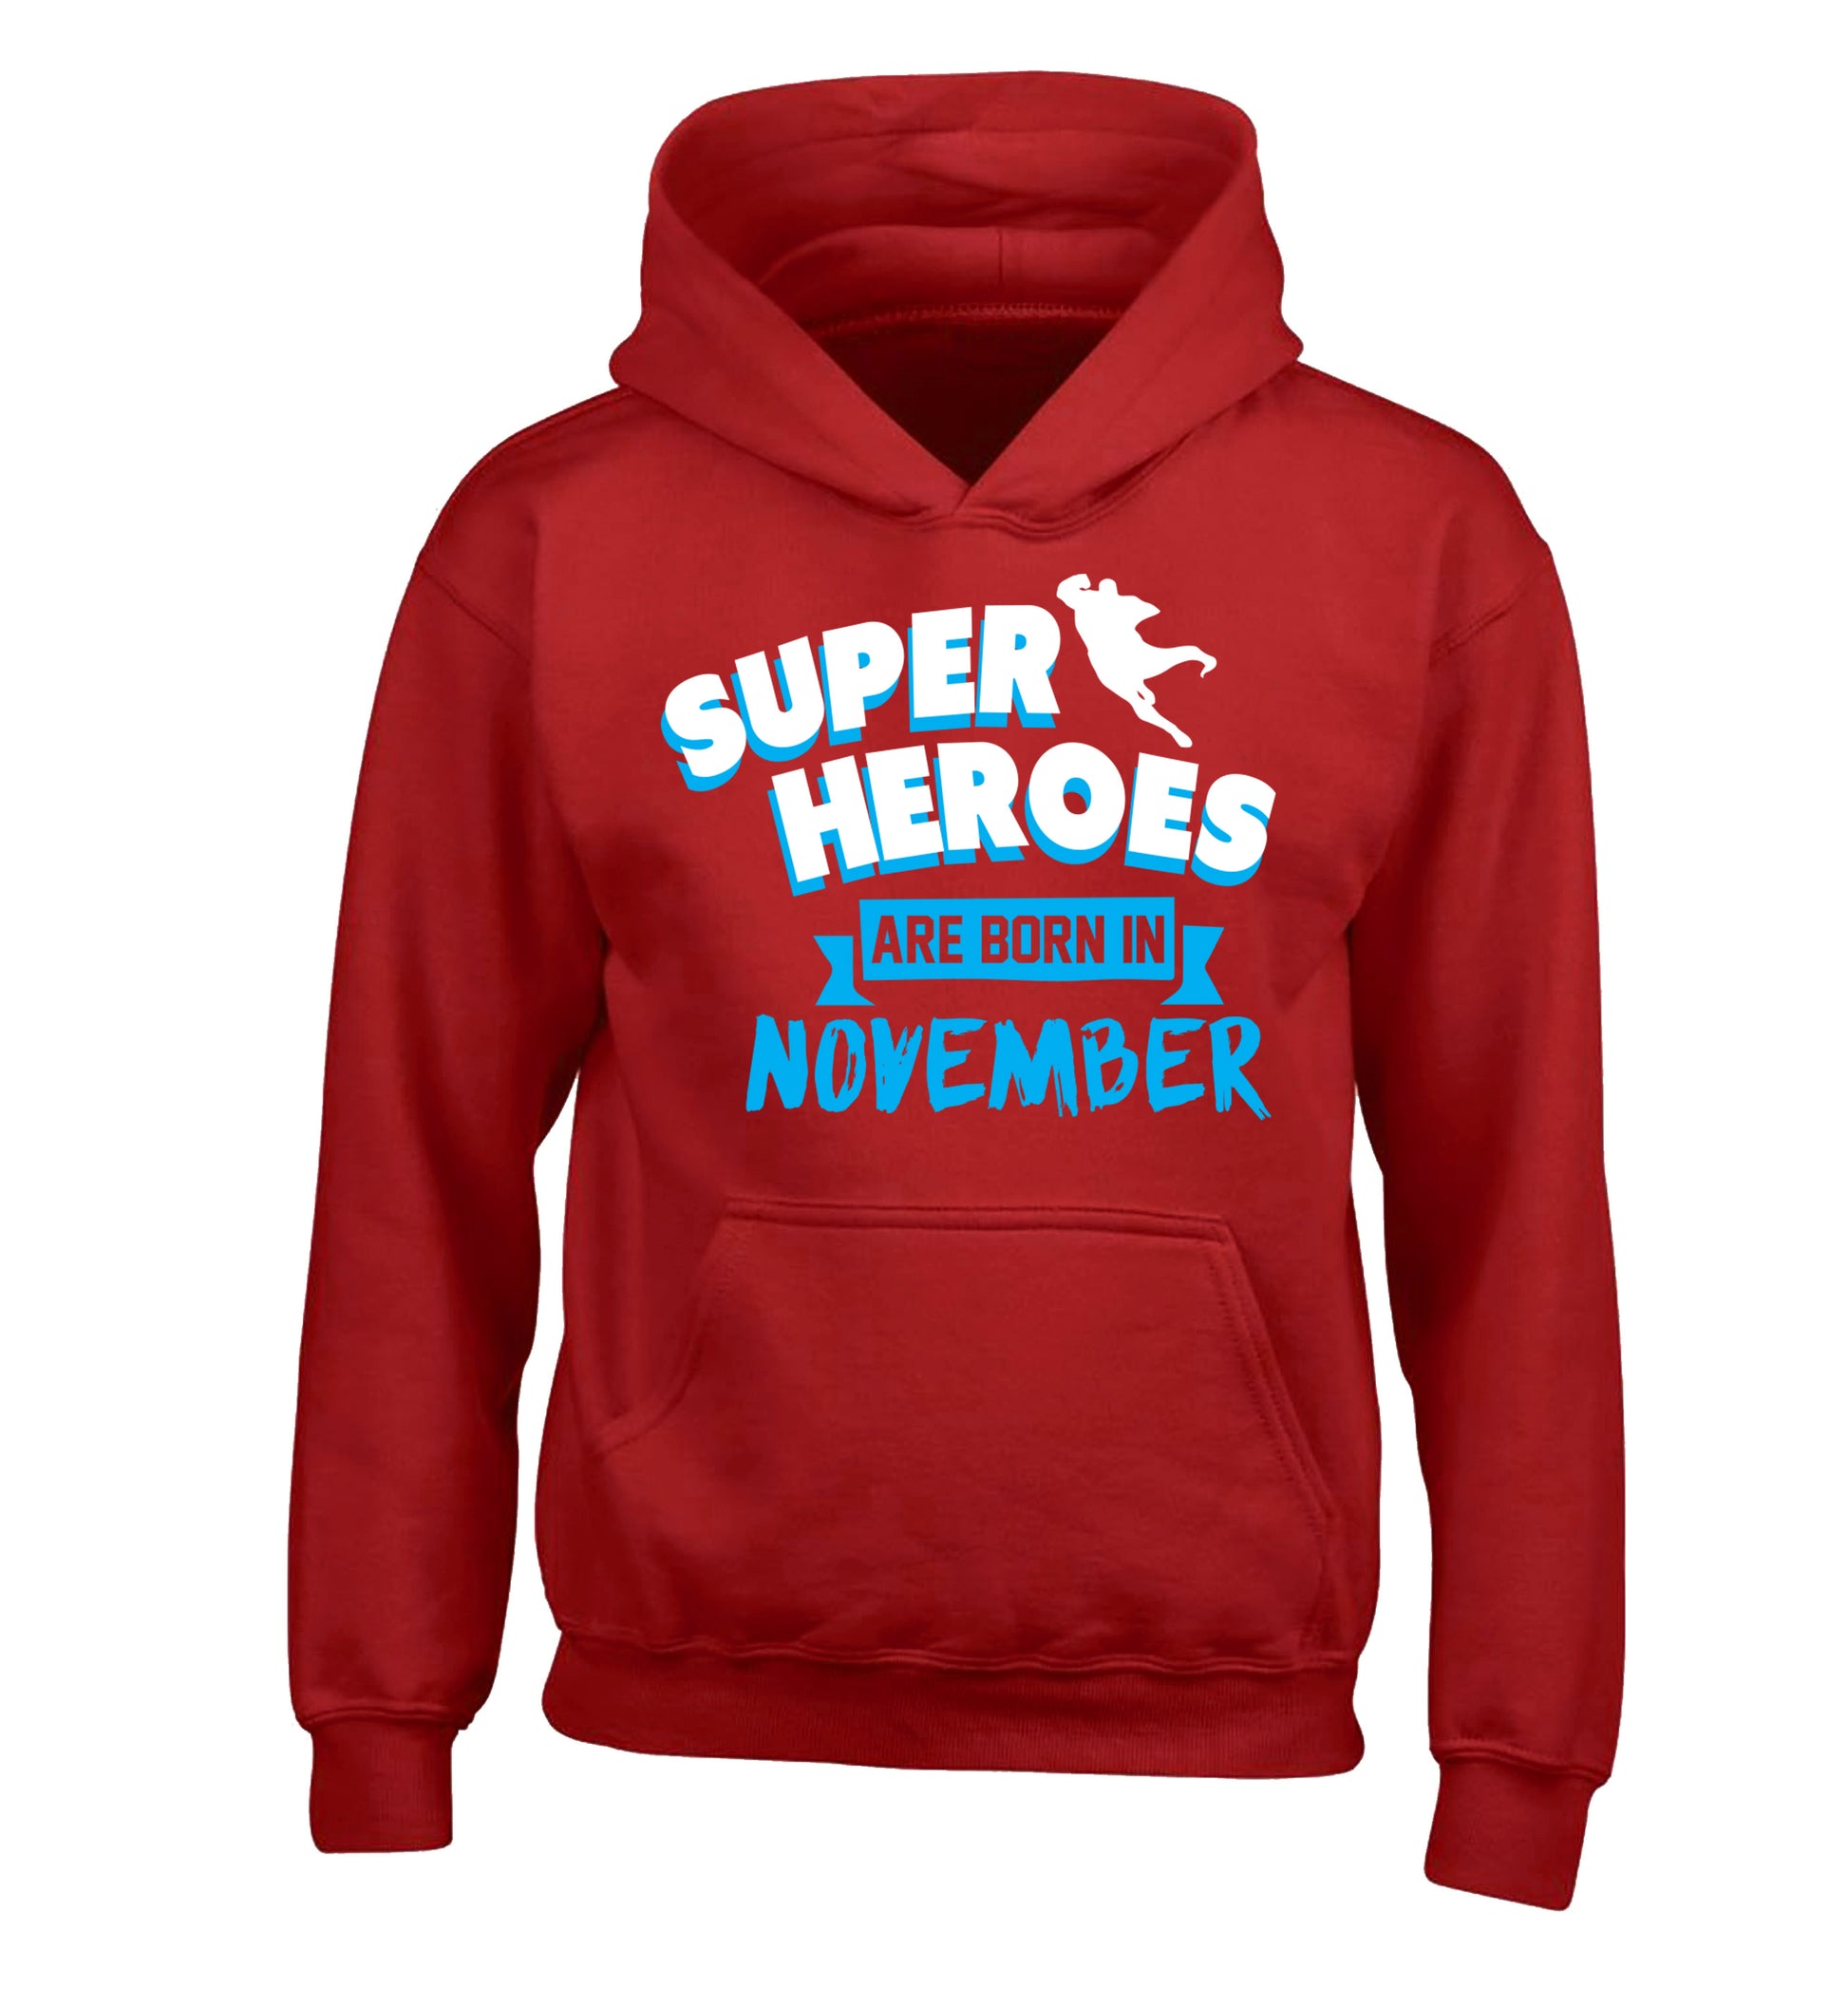 Superheroes are born in November children's red hoodie 12-13 Years